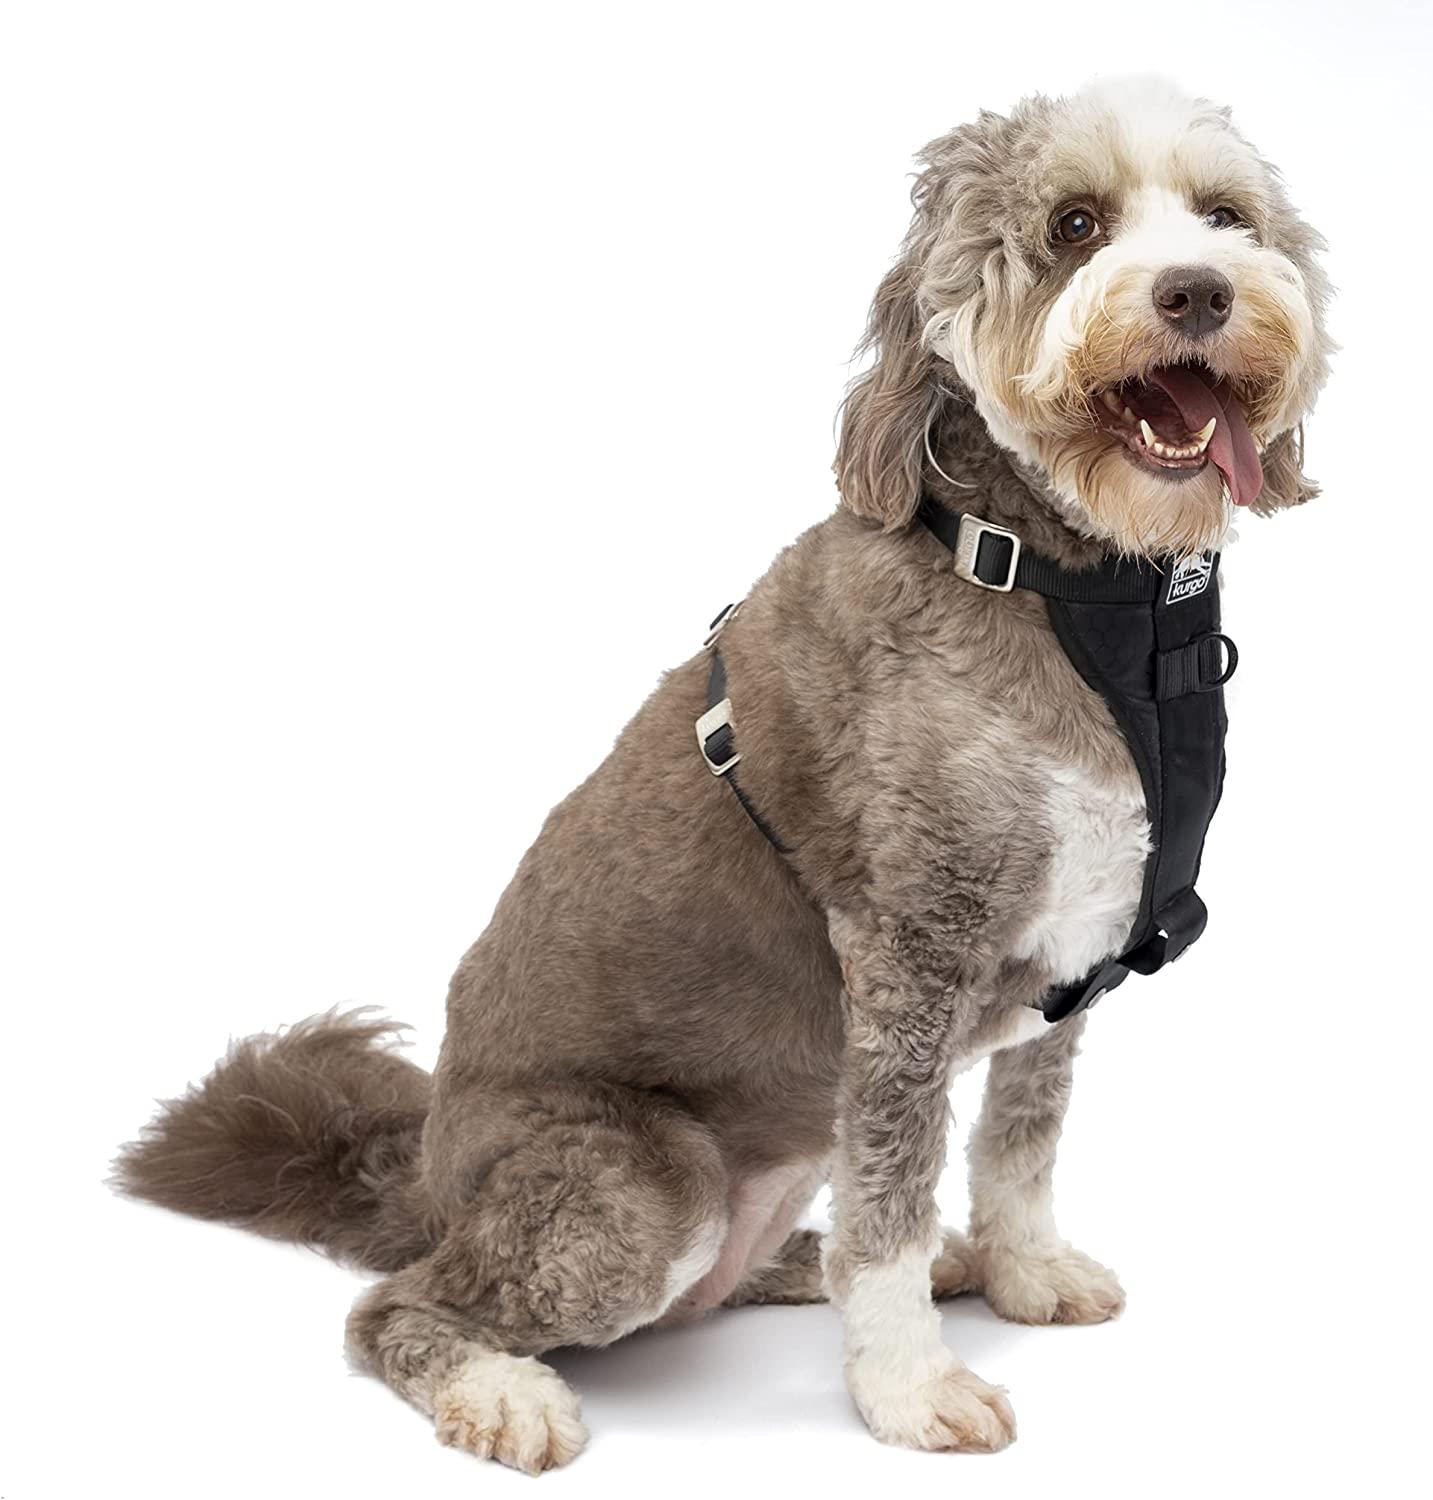 Kurgo Tru-Fit Dog Harness